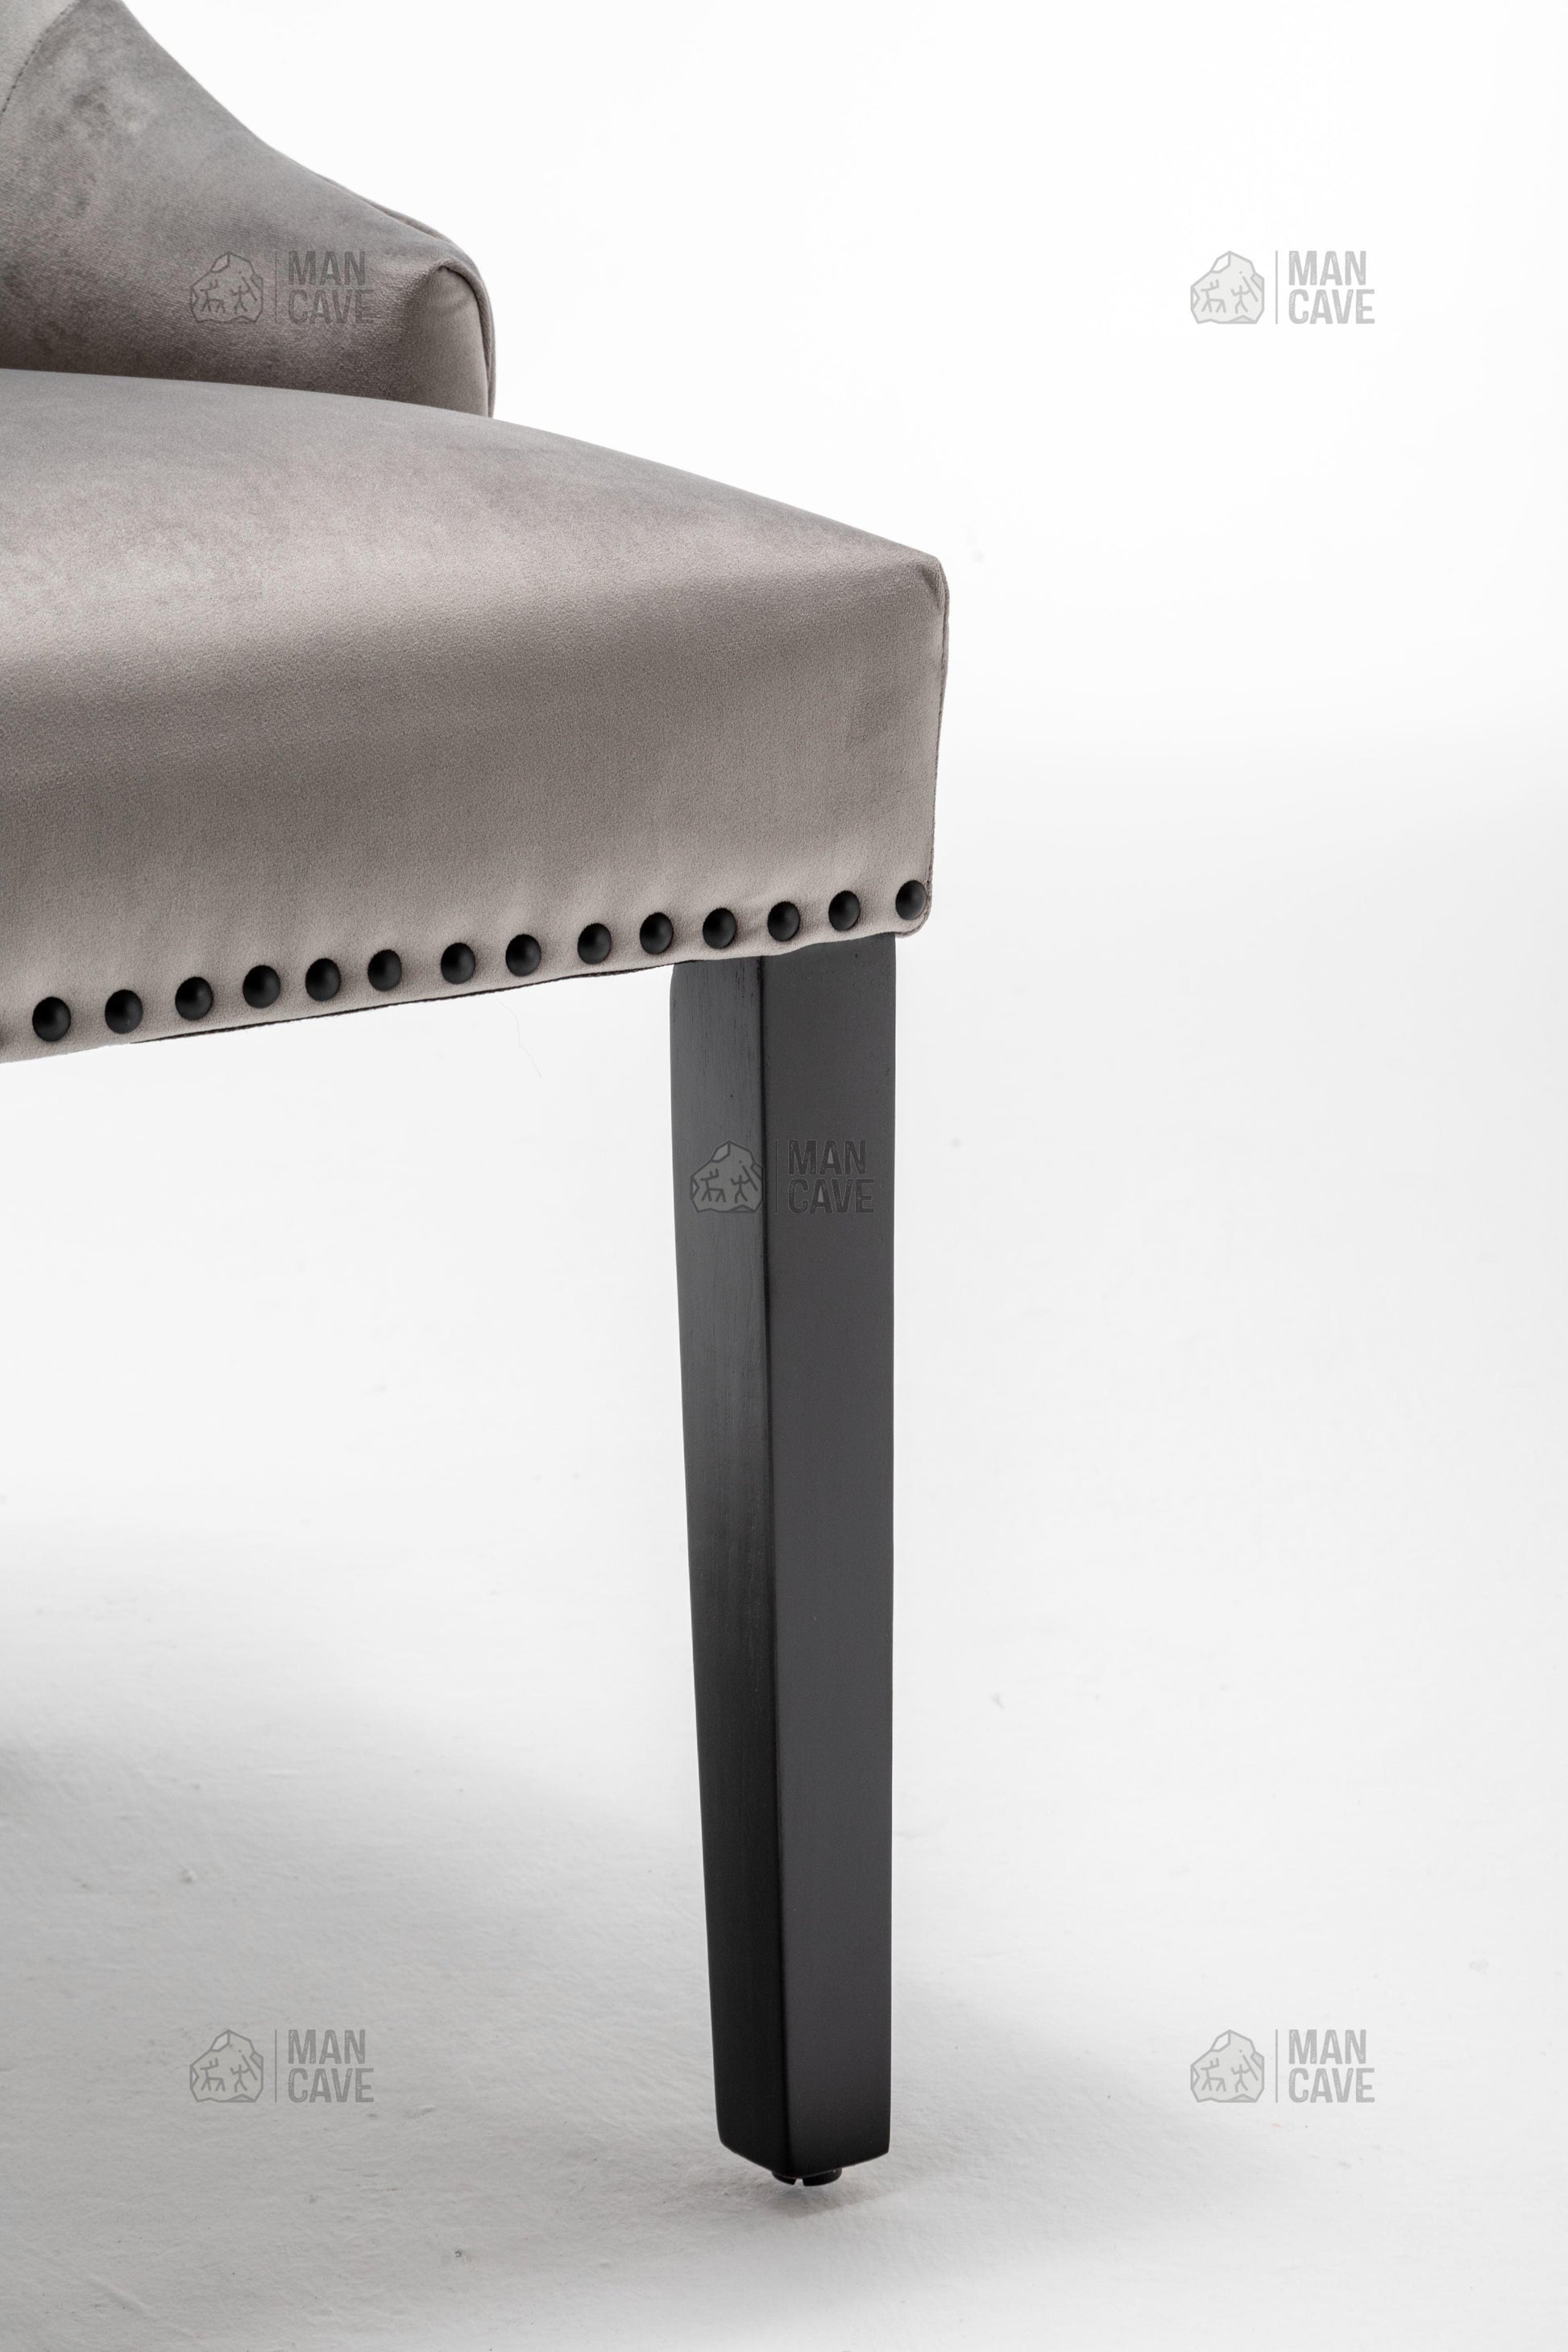 Cambridge Dining Chair - Light Grey - mancavesuperstore